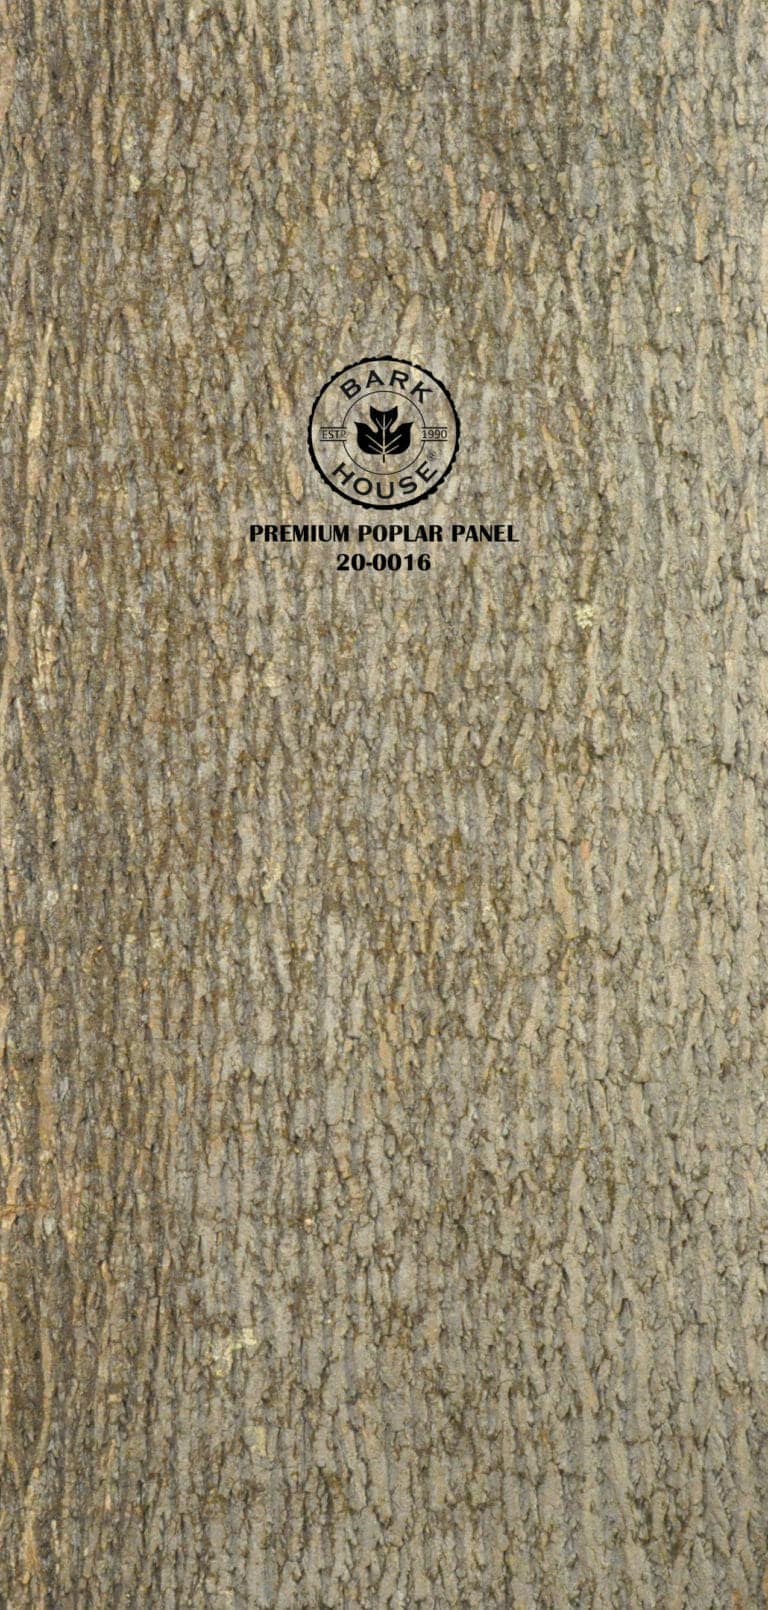 Bark House poplar bark panel SKU POPP-PRE-20-0016